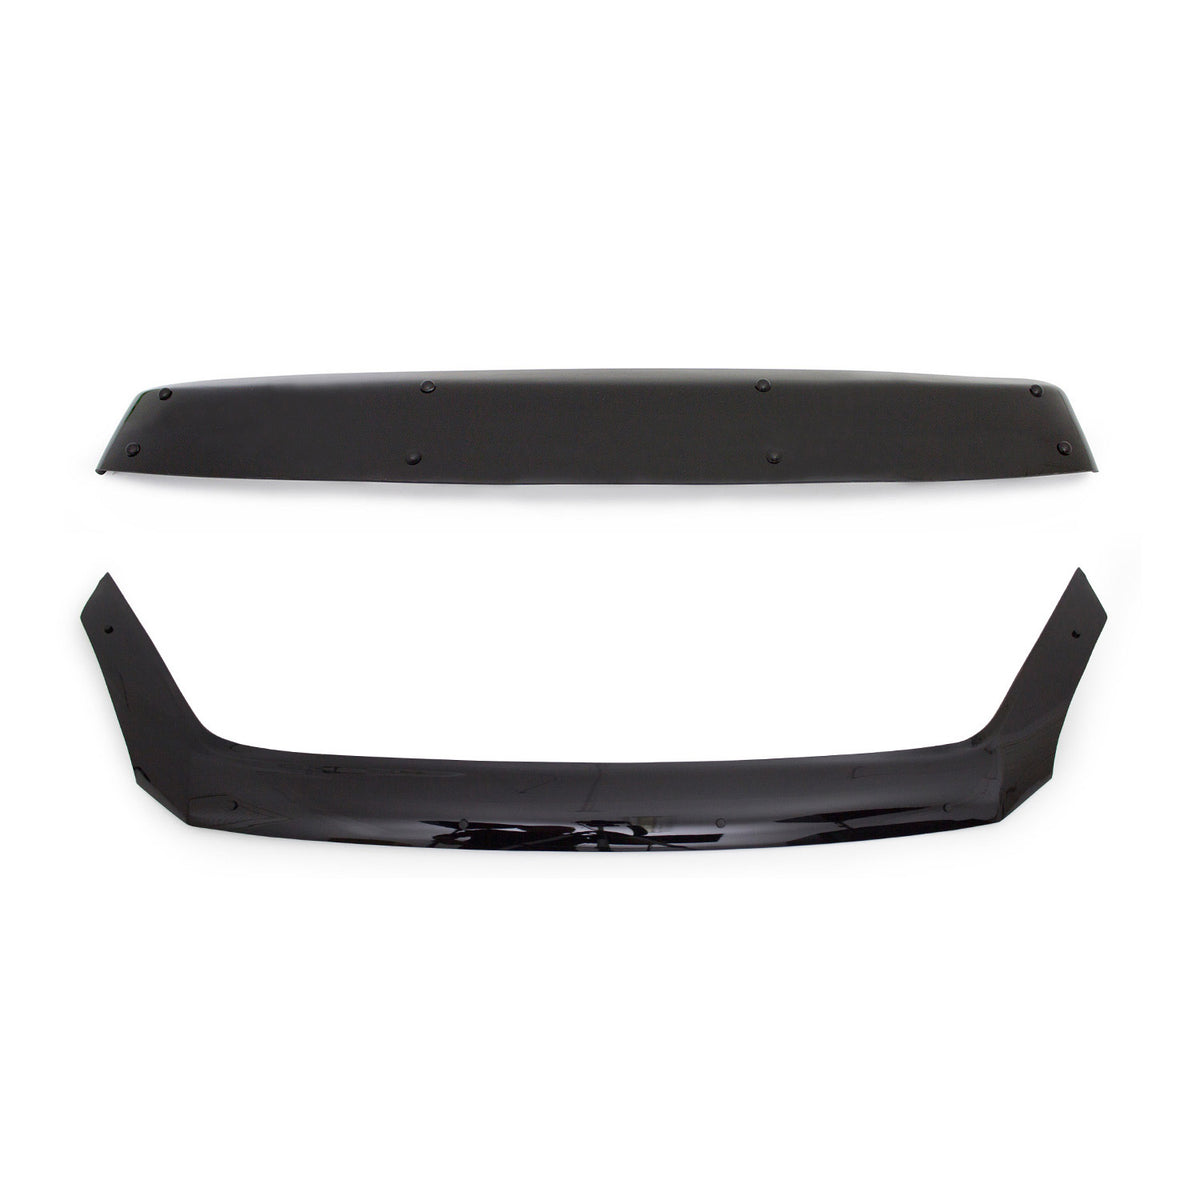 Sun visor bonnet deflector set for VW Crafter 2006-2012 acrylic dark 2 pieces